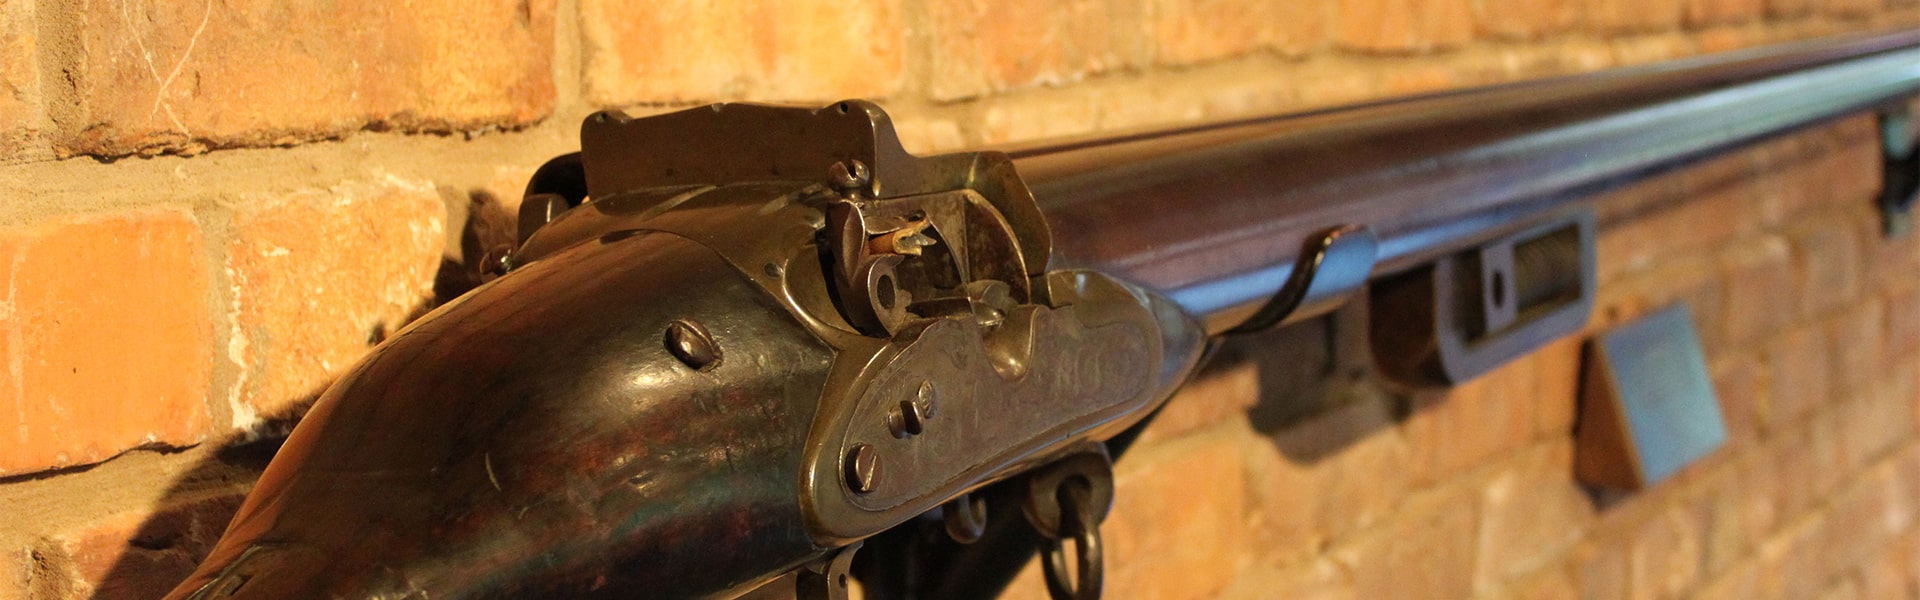 An antique firearm hung on a wall